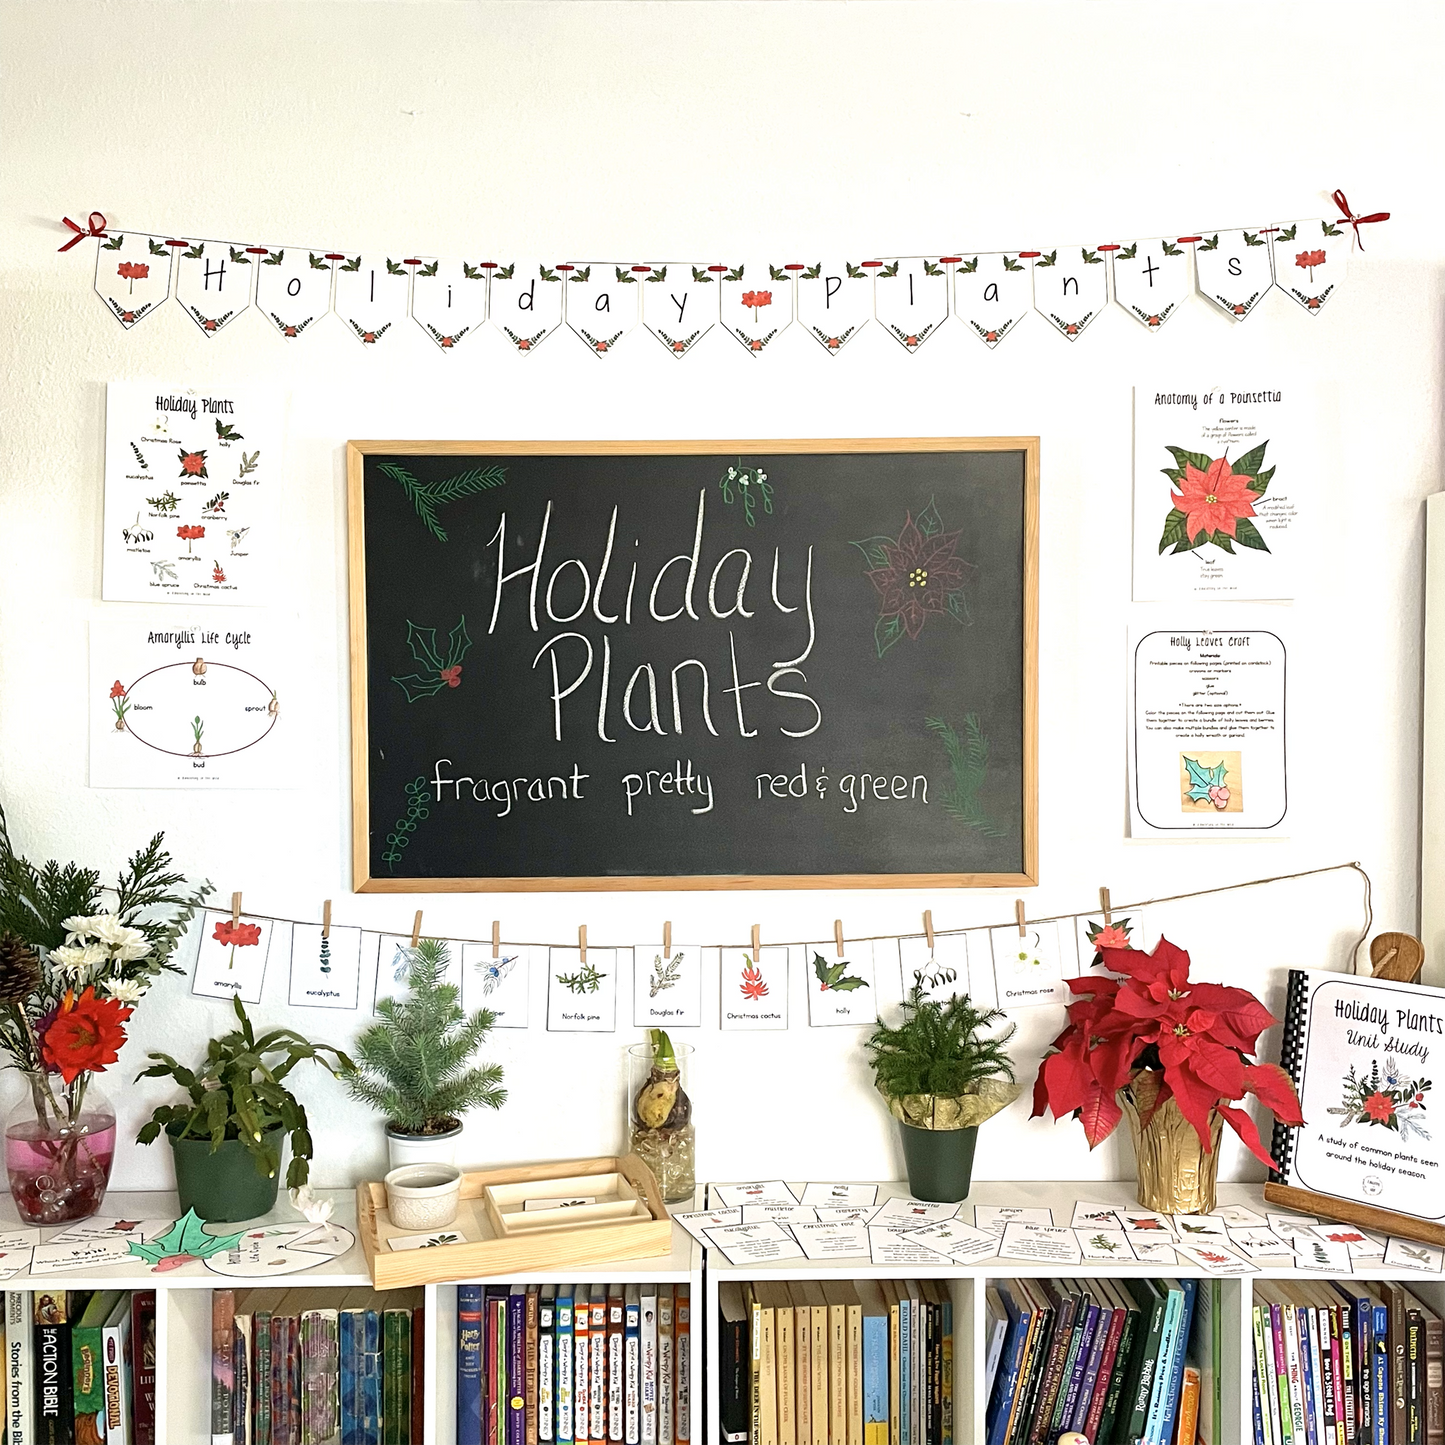 Holiday Plants Unit Study